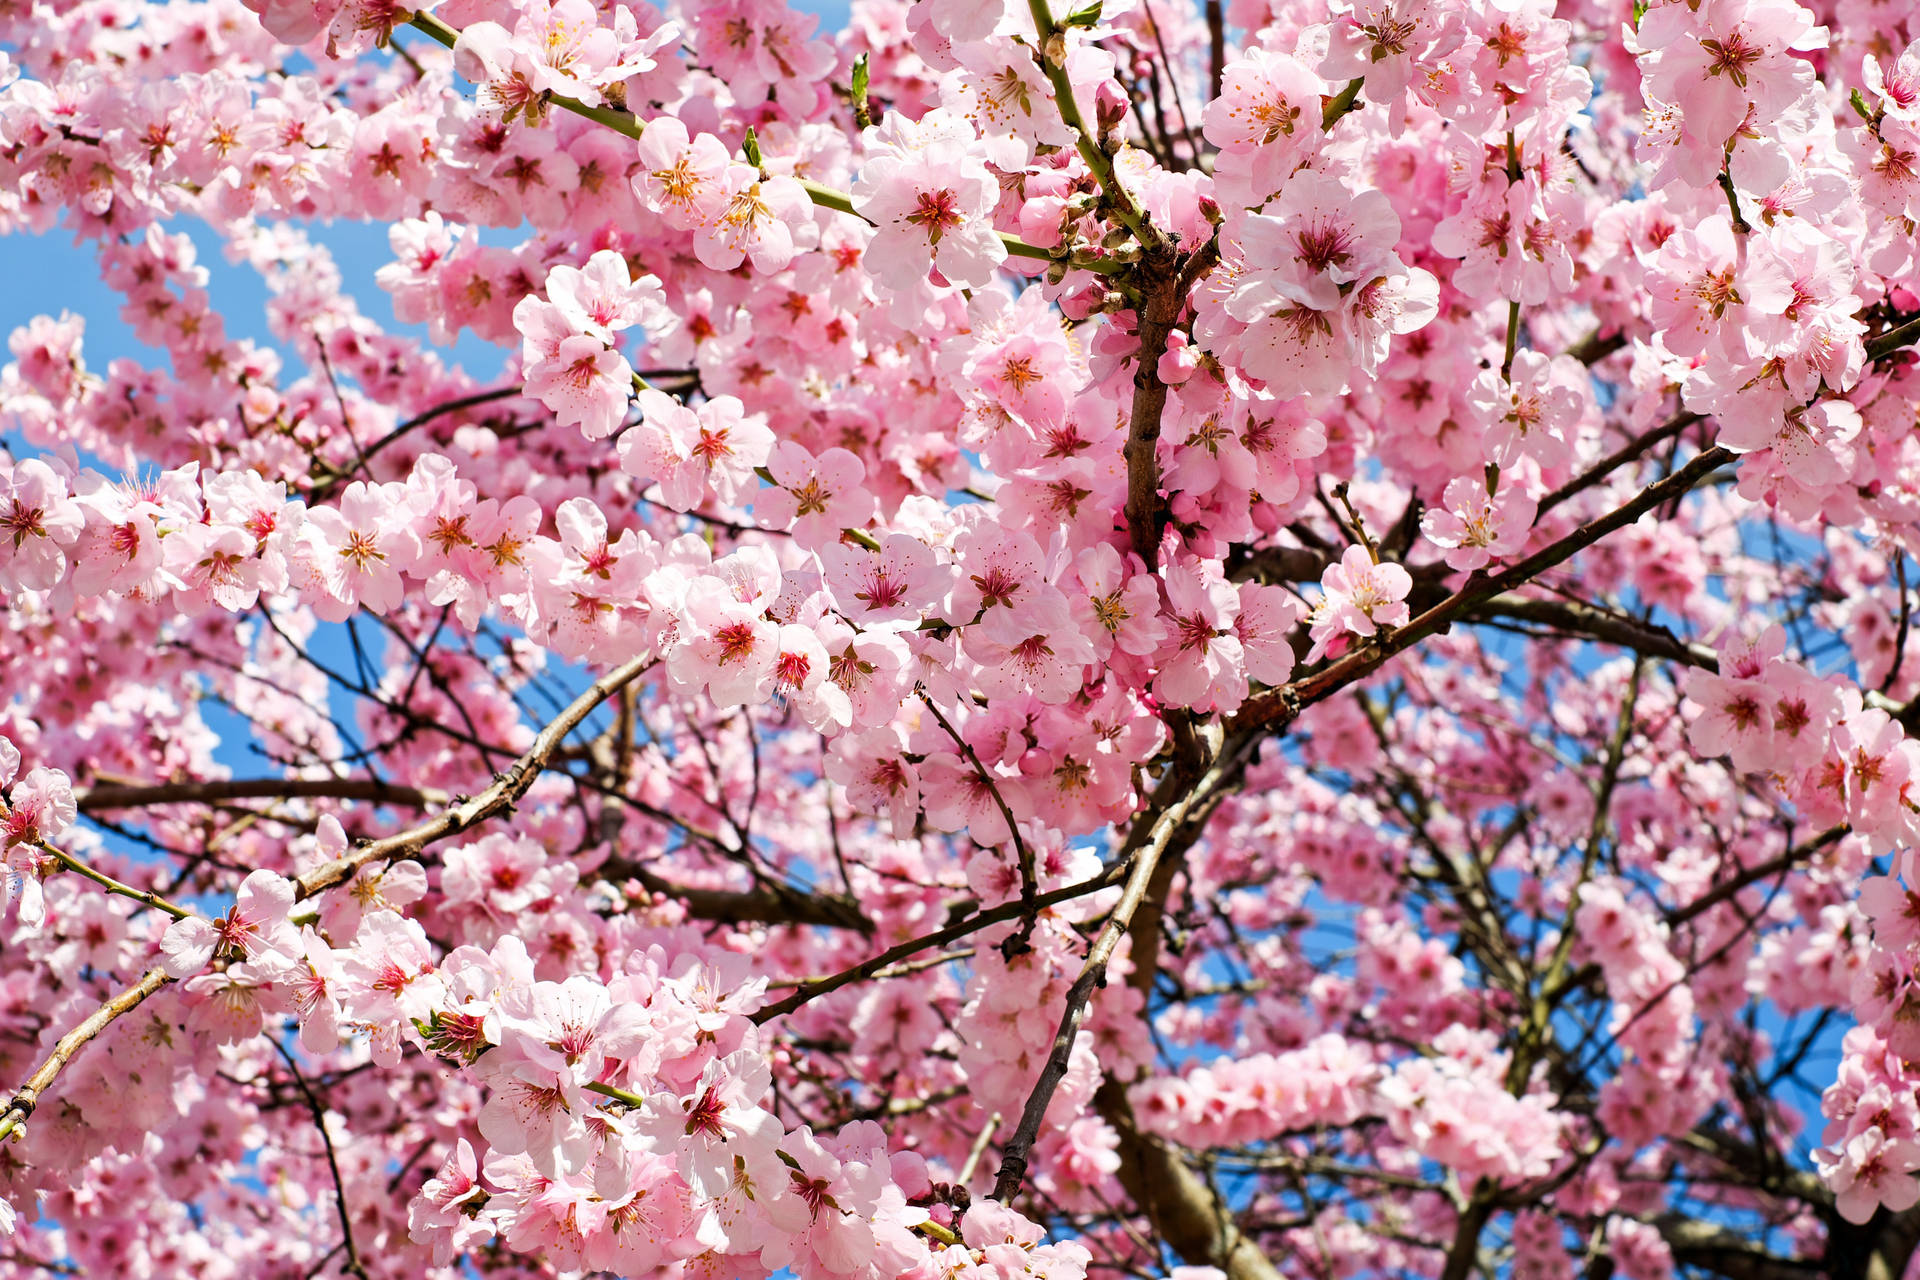 Majestic Cherry Blossoms Radiating Pink Glory Background